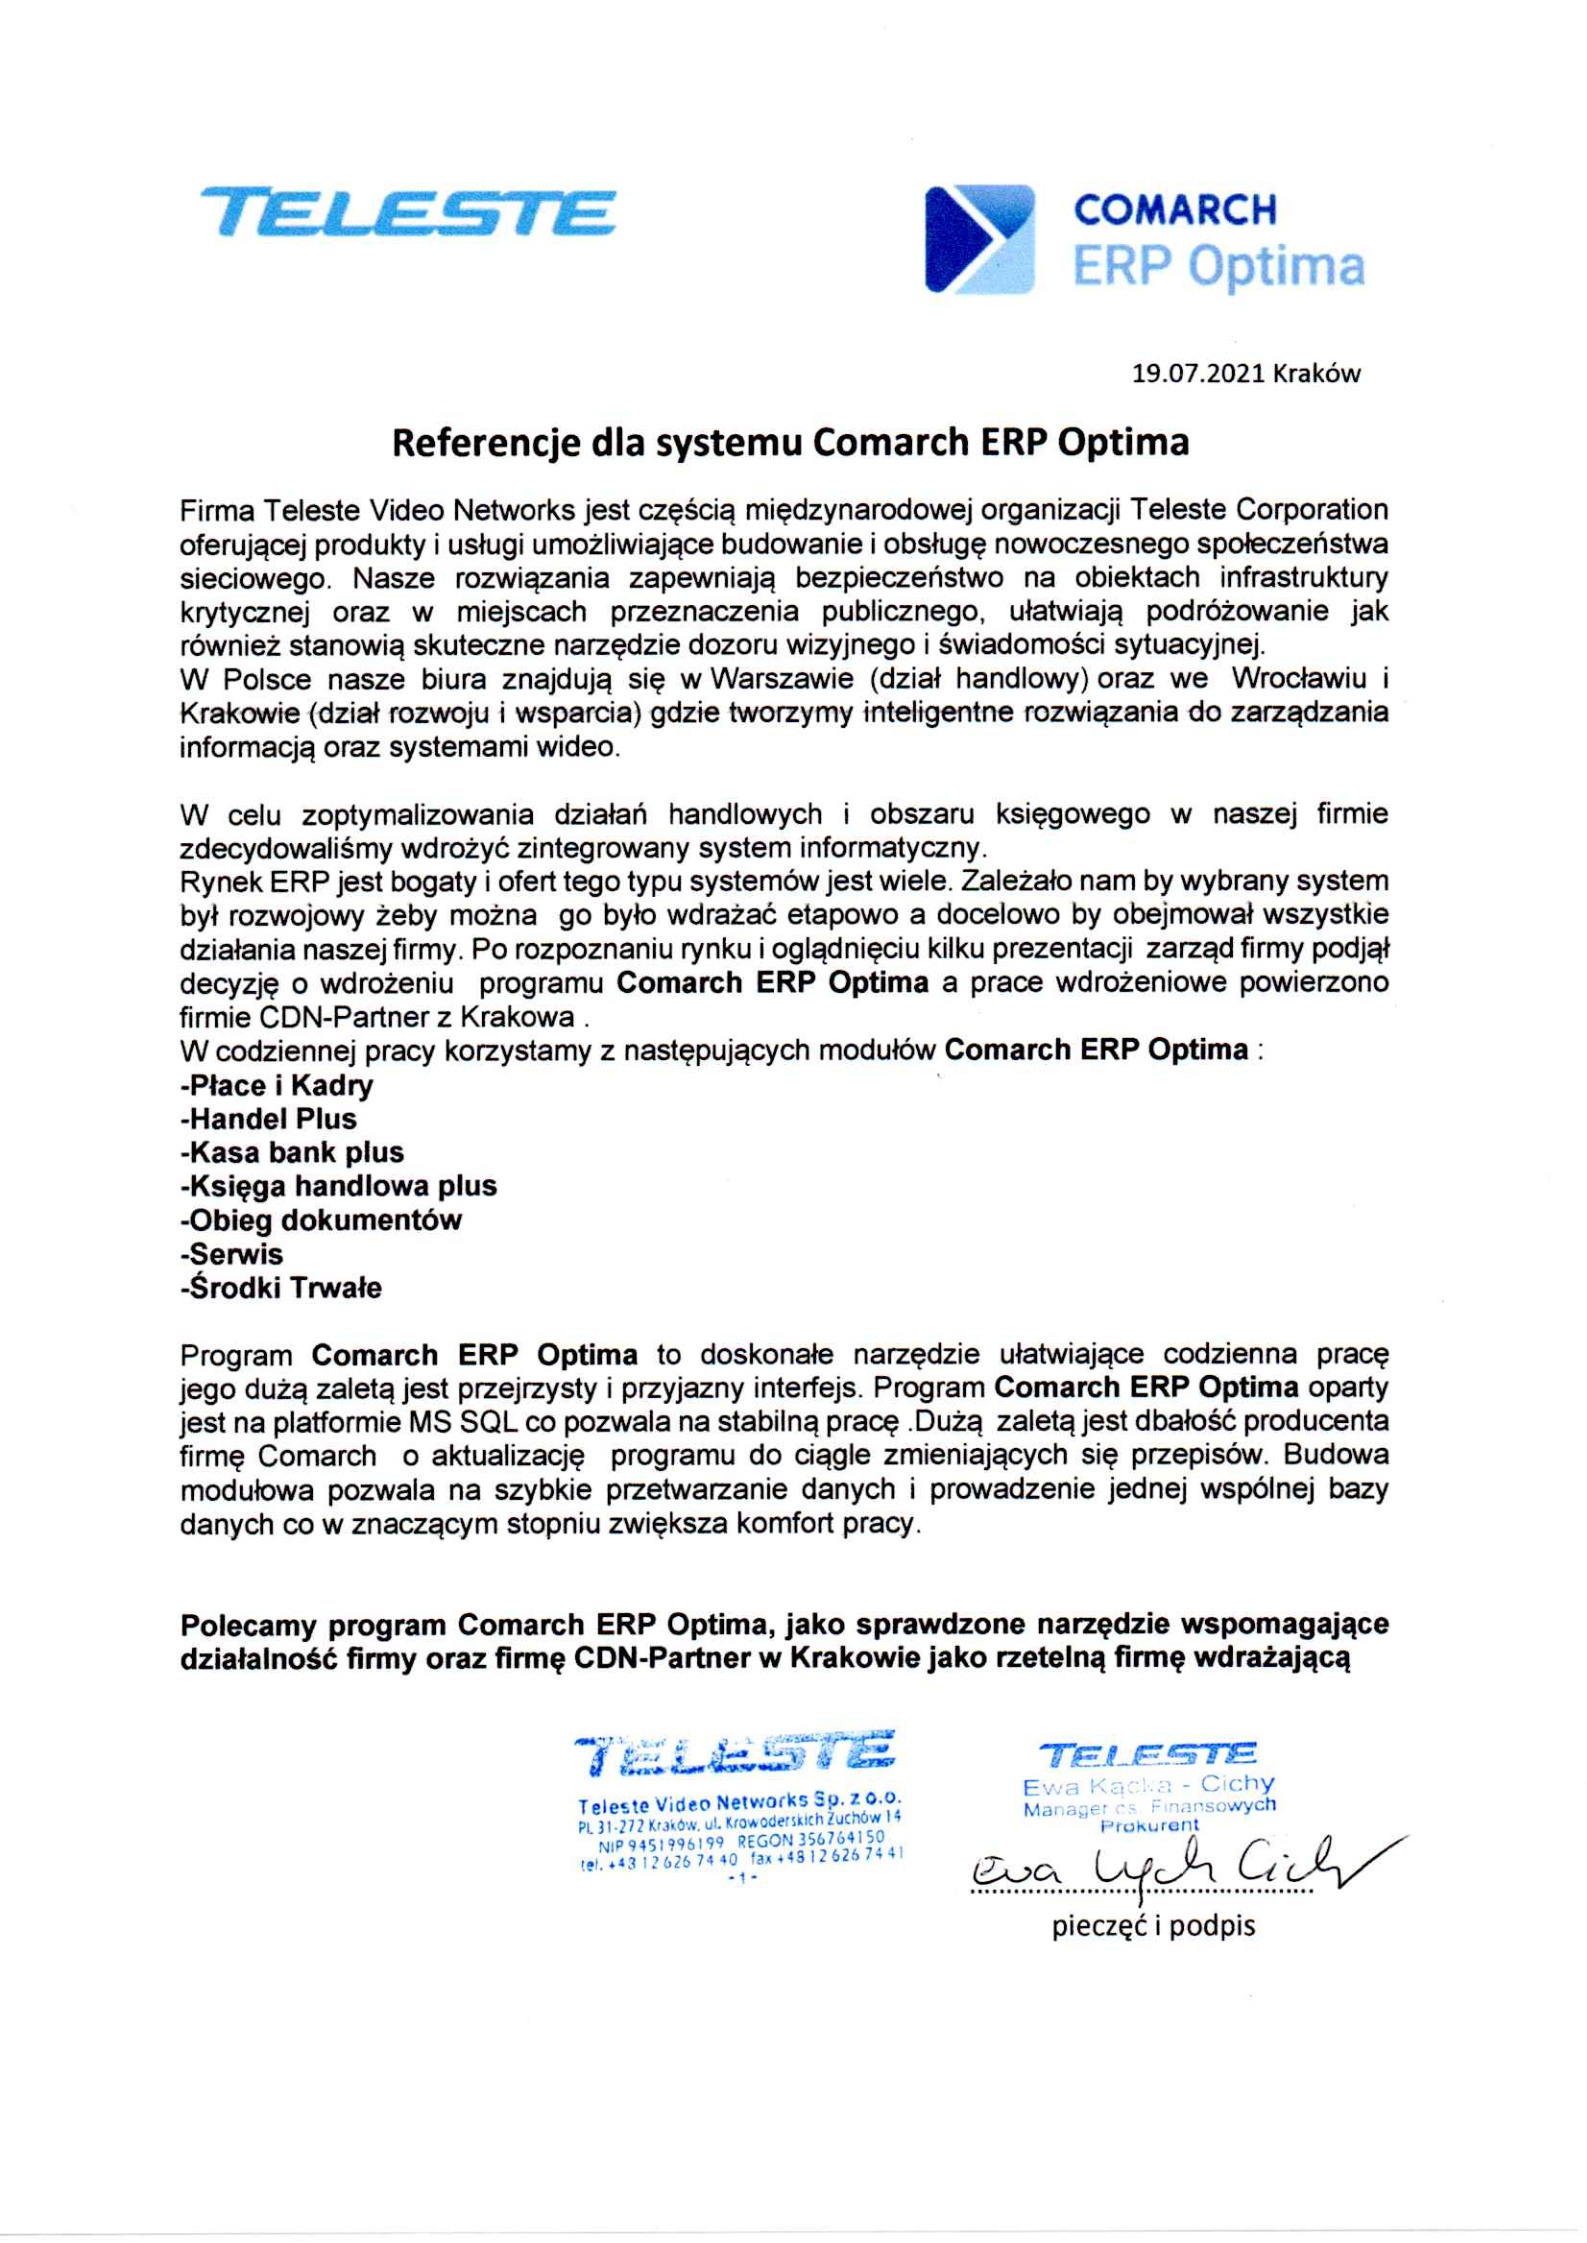 Referencje od Teleste dla systemu Comarch ERP Optima